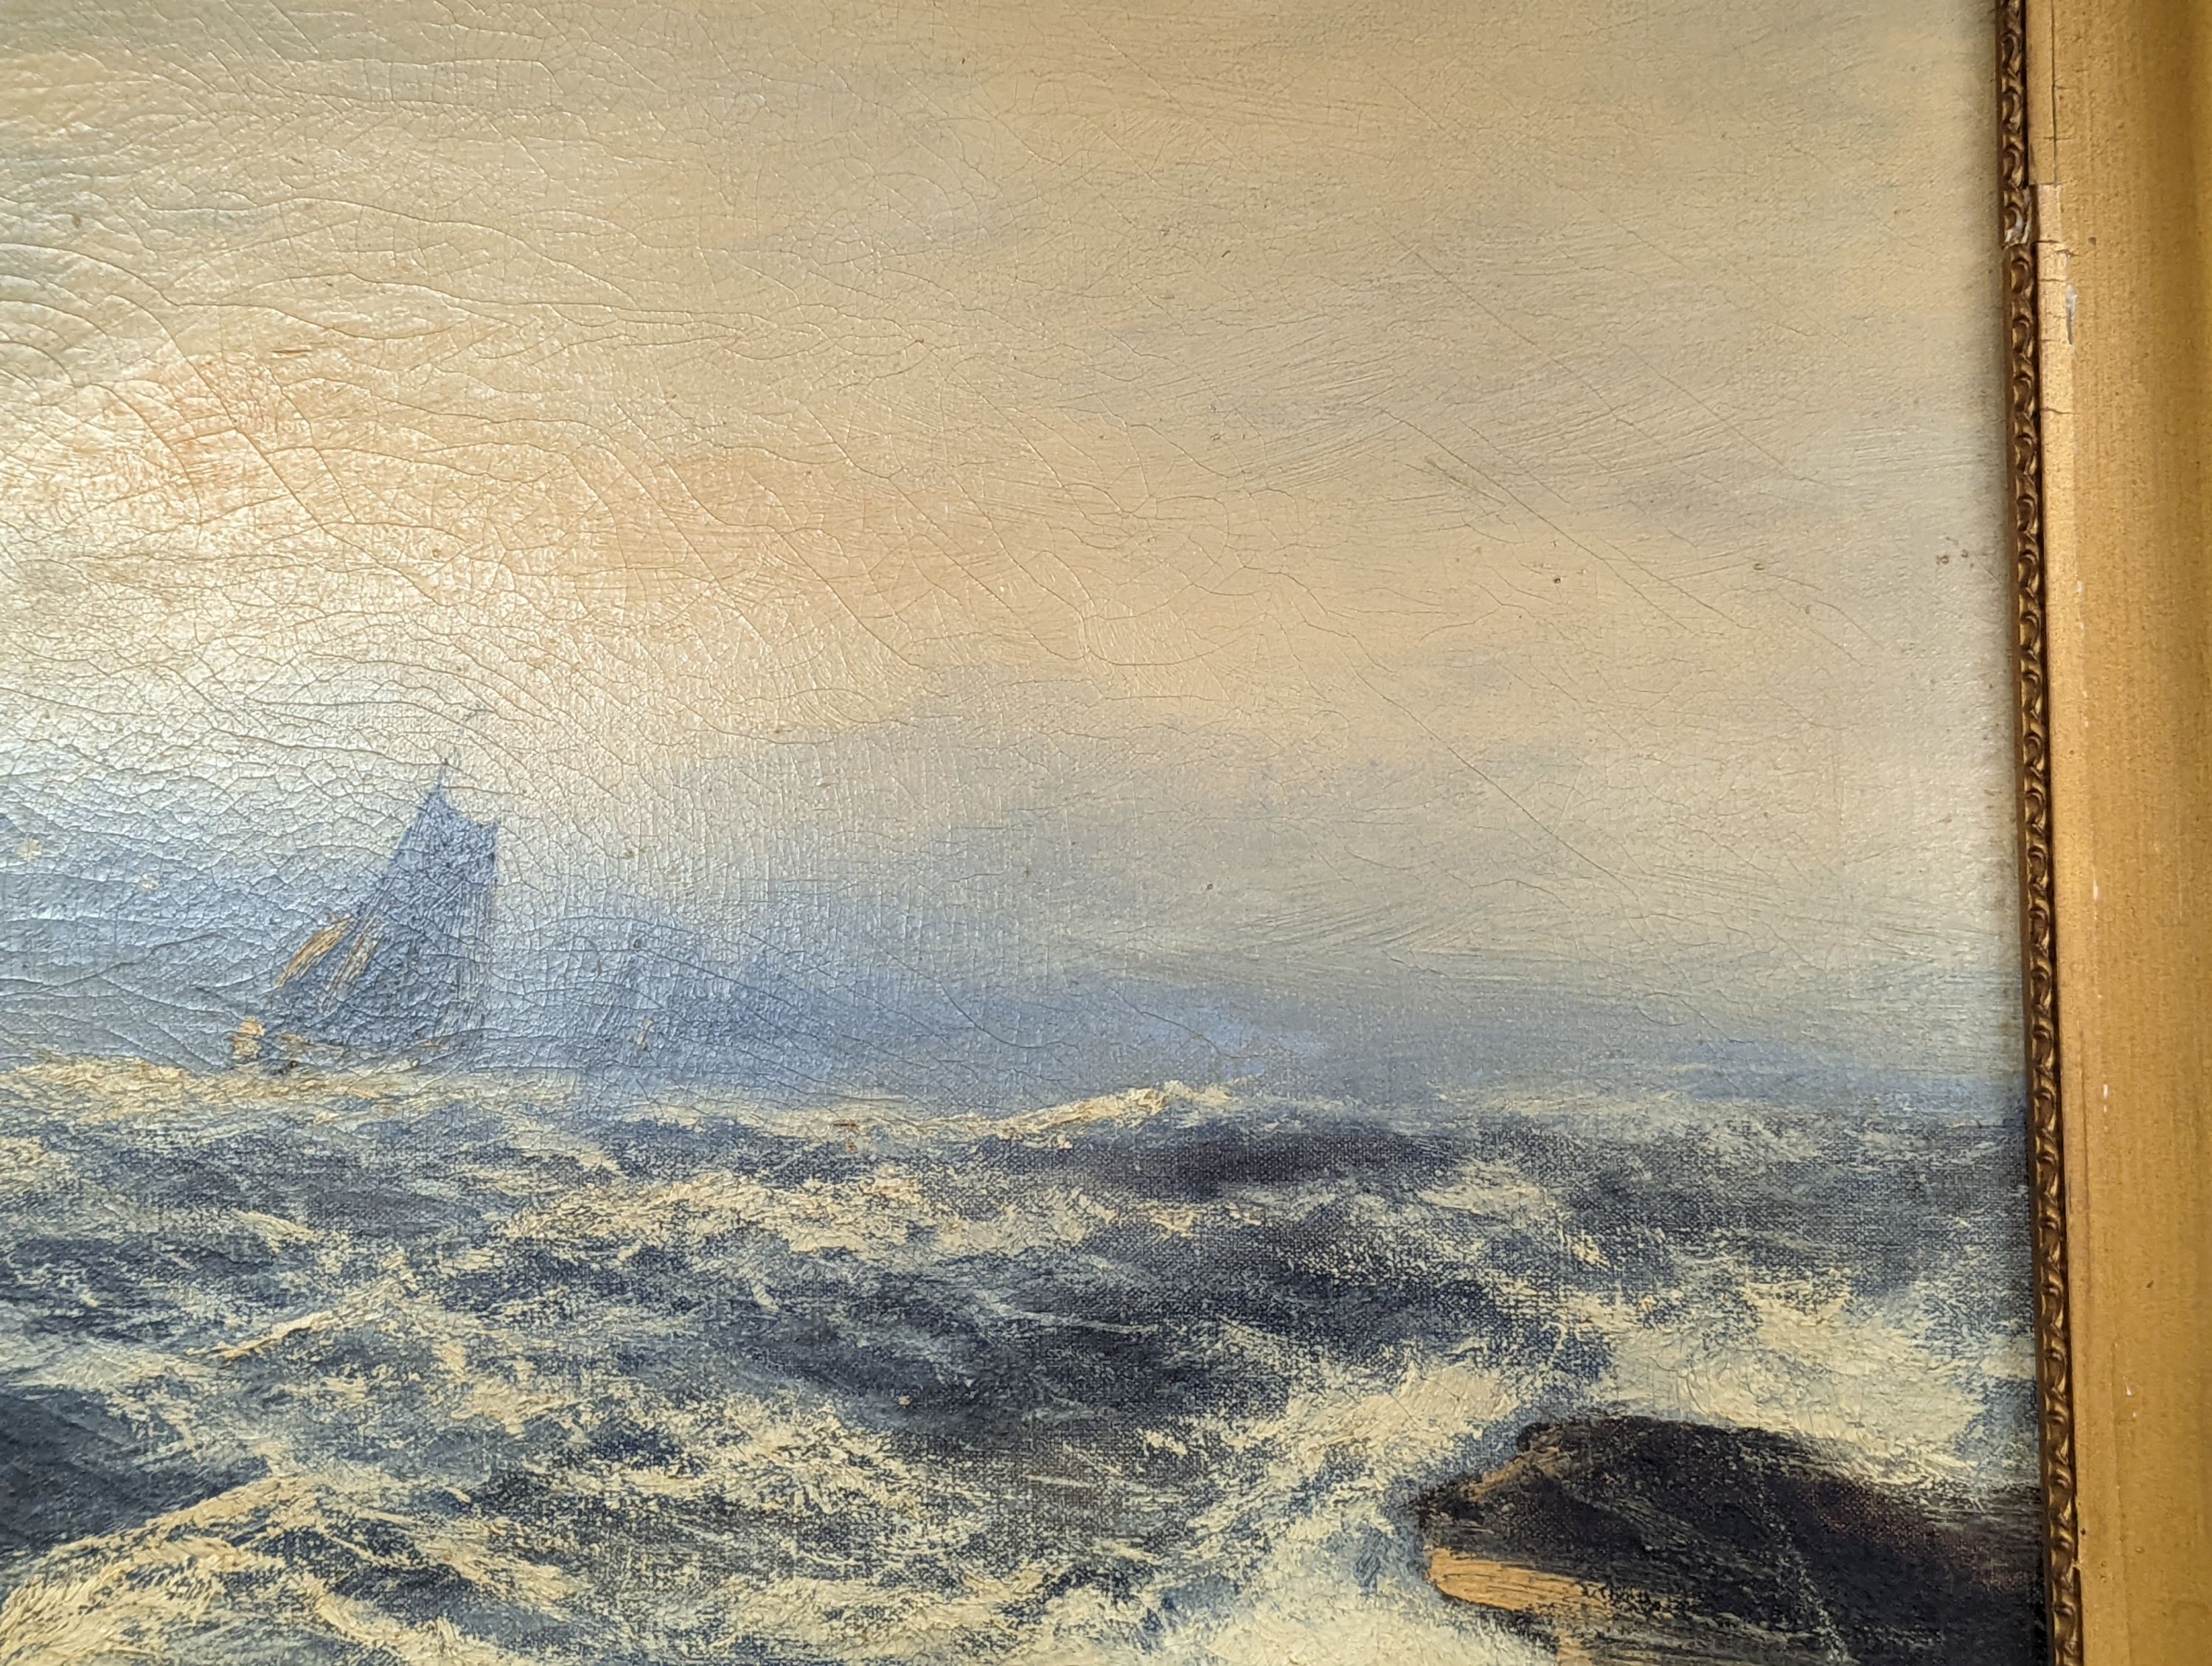 English School c.1900, oil on canvas, Fishing boats off the coast, 50 x 76cm